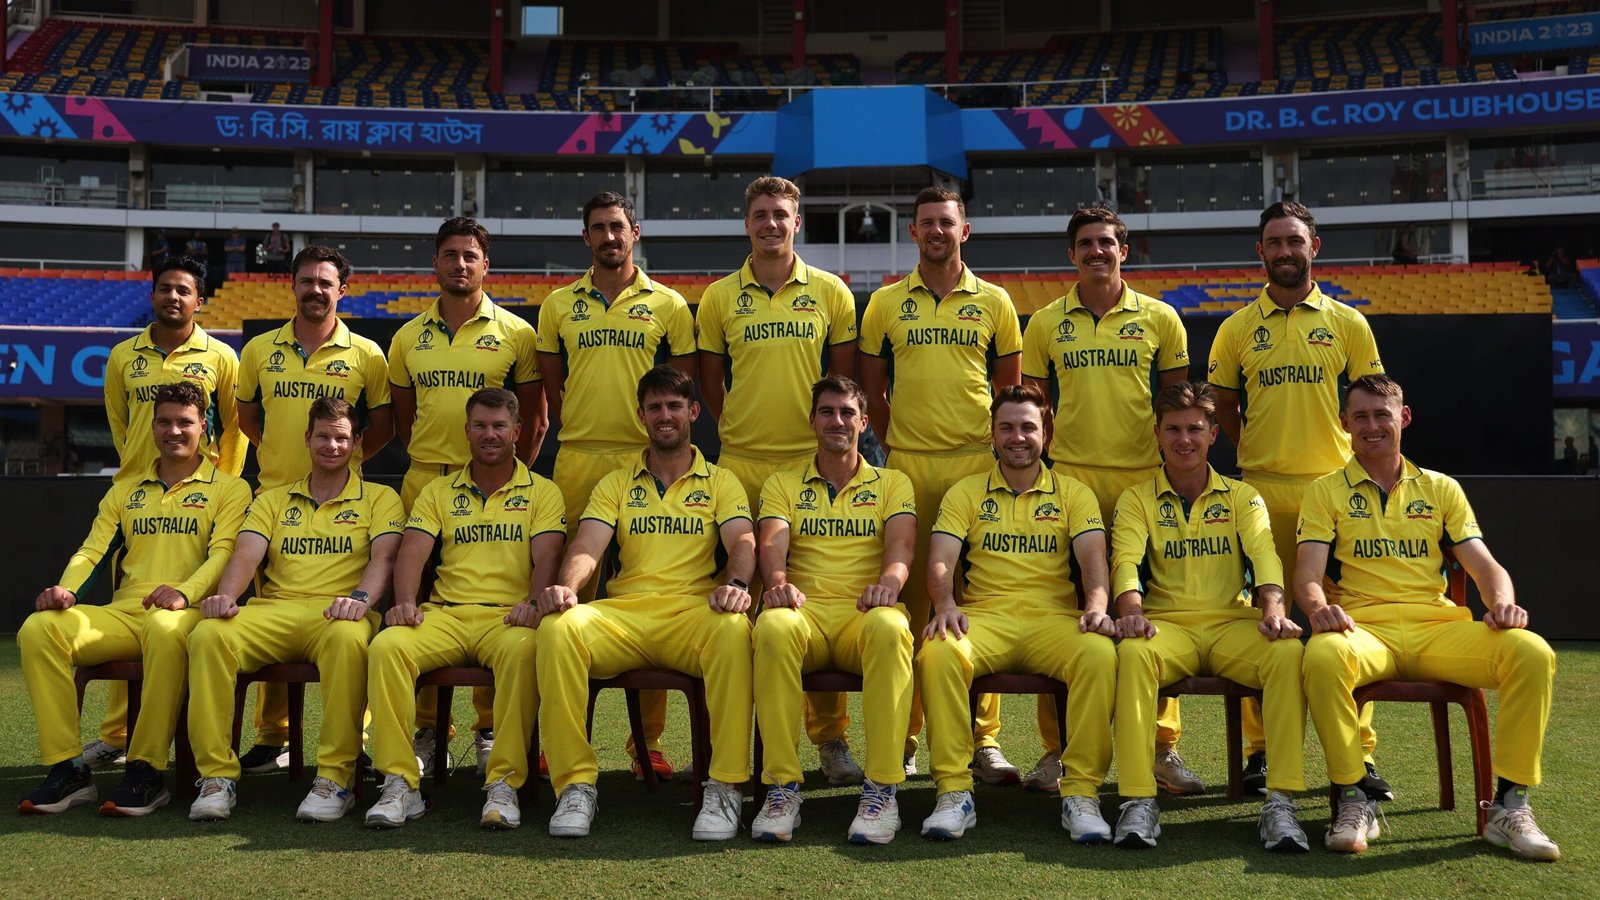 Australia cricket team (pic credit cricketworldcup "X")